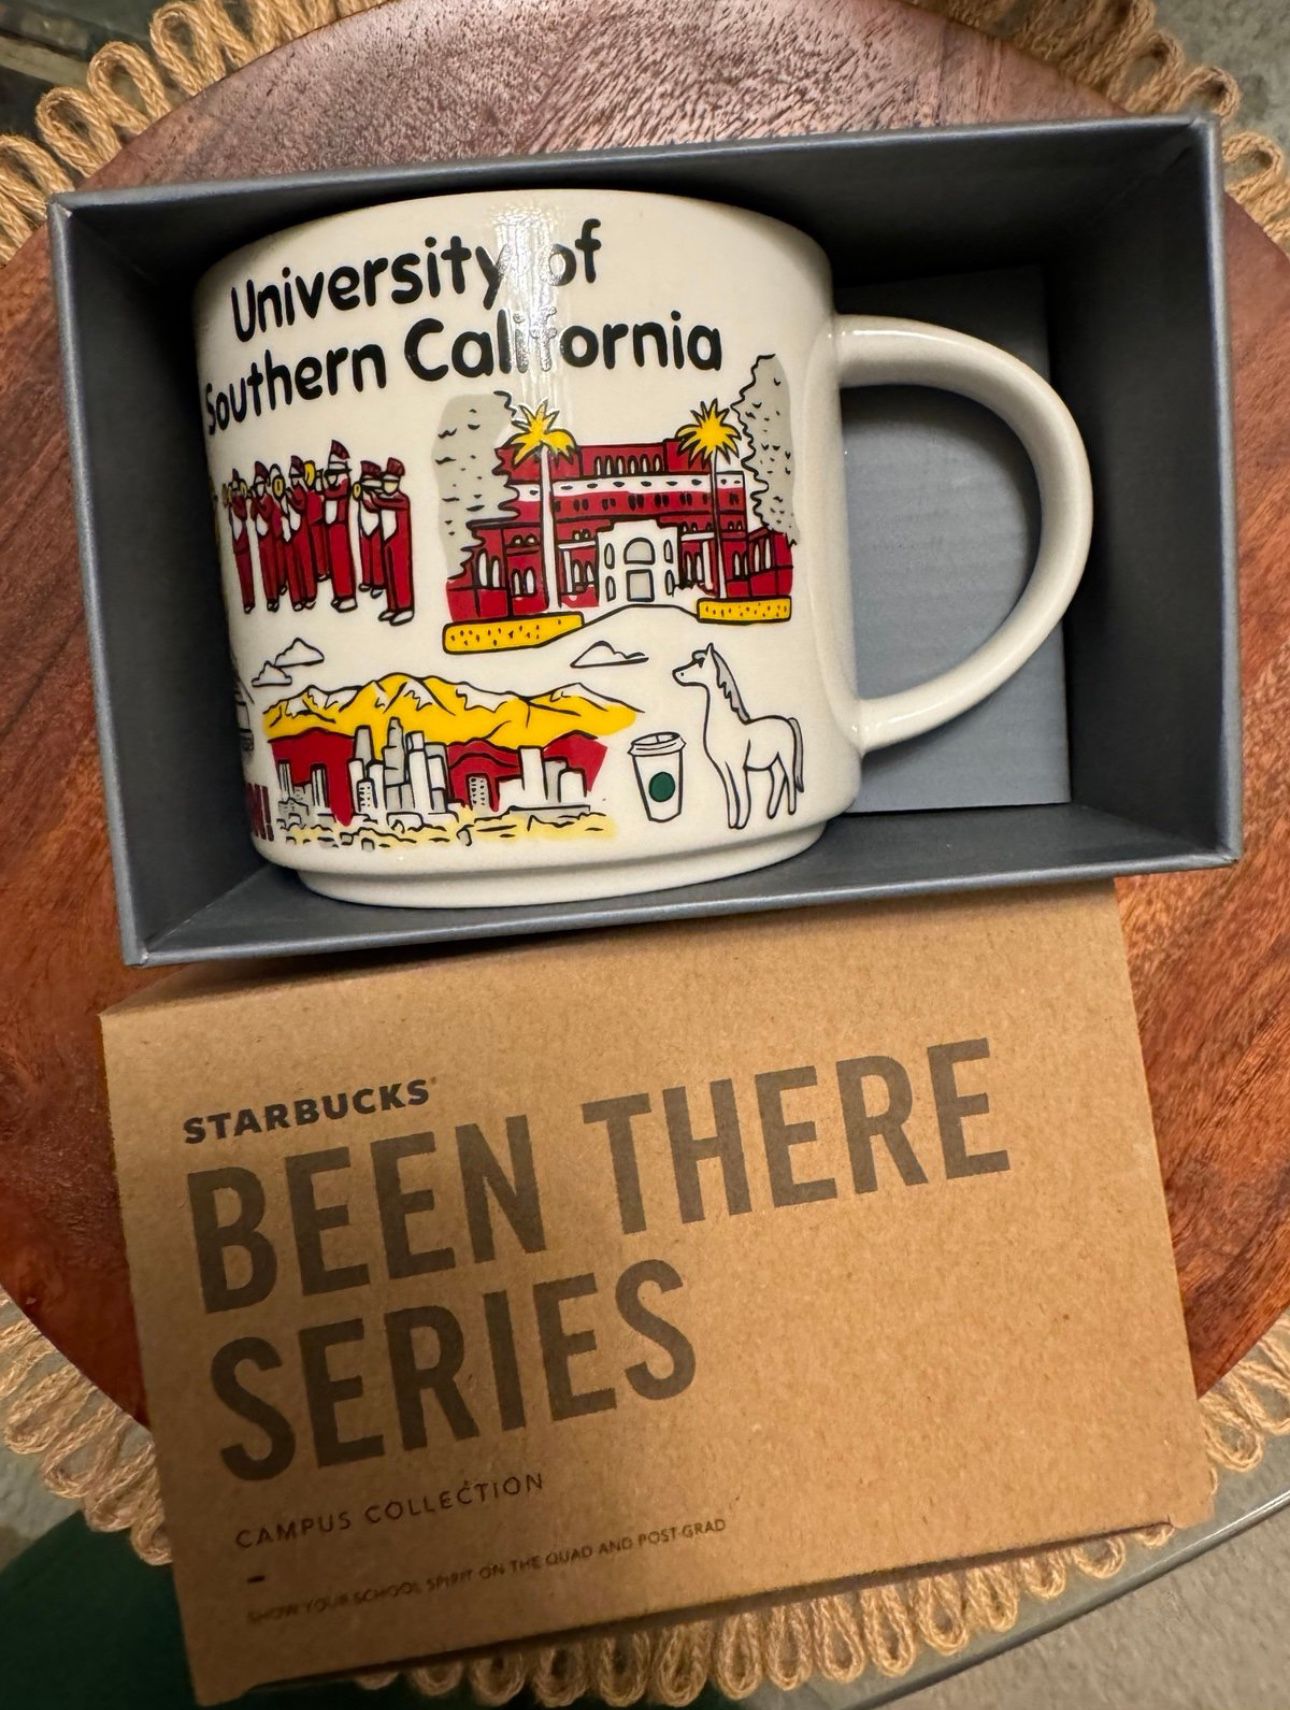 USC X Starbucks Mug (“Been There Series”)